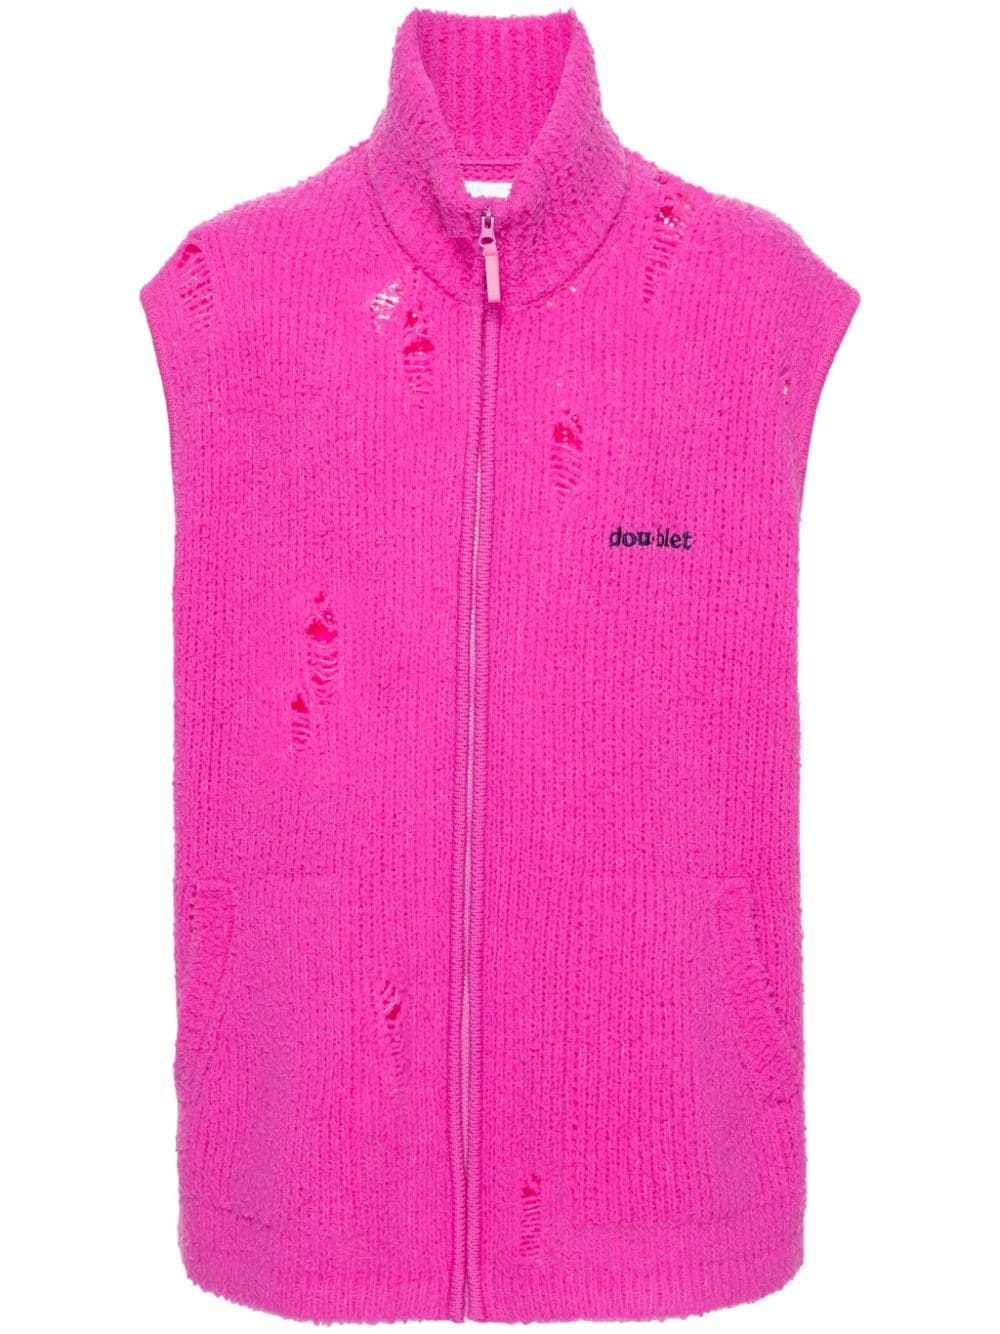 Doublet embroidered-logo distressed vest - Pink von Doublet